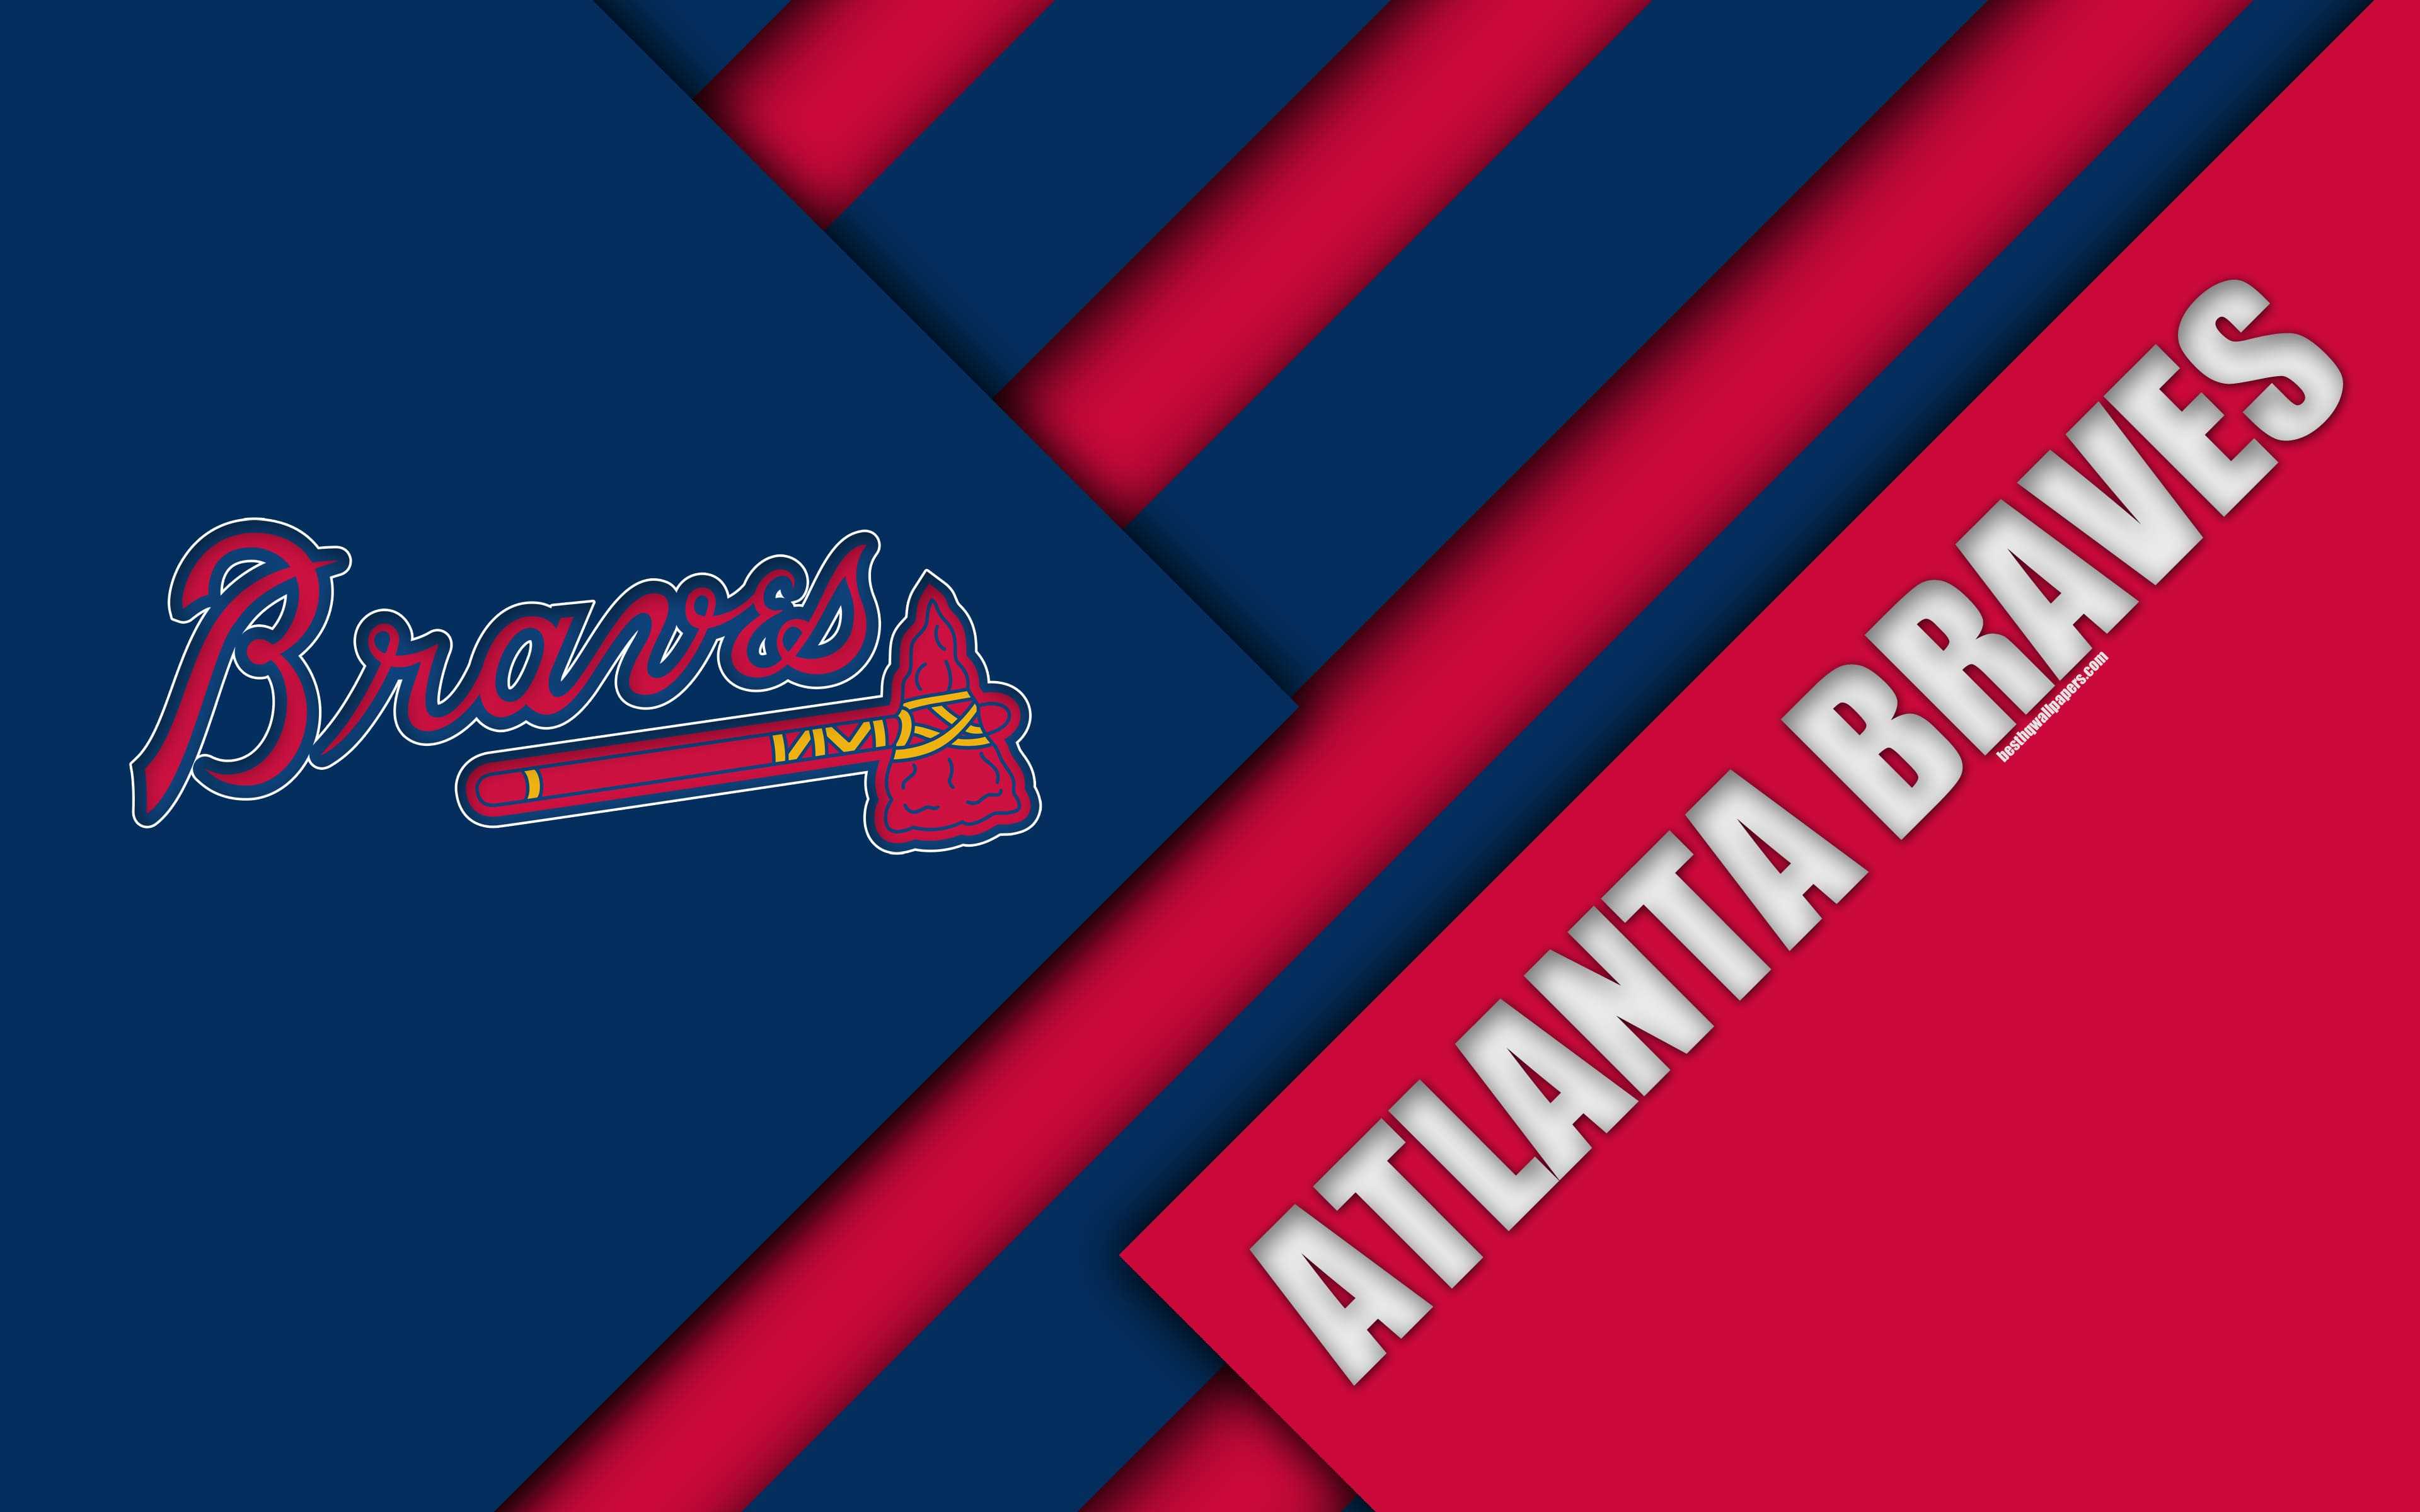 Atlanta Braves Wallpaper - iXpap  Atlanta braves wallpaper, Atlanta braves  iphone wallpaper, Braves iphone wallpaper